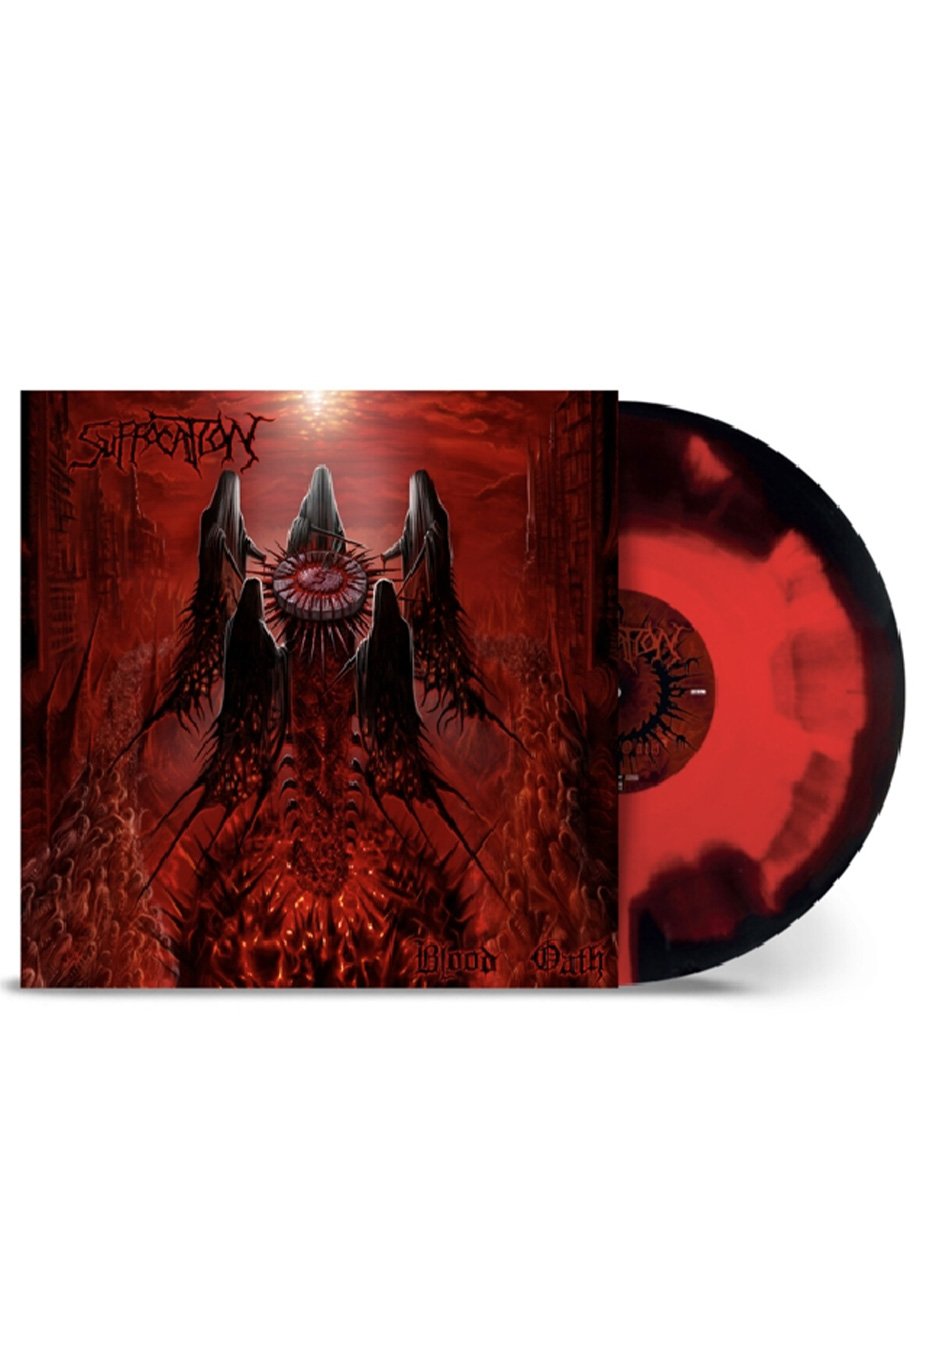 Suffocation - Blood Oath Ltd. Red/Black Corona - Colored Vinyl